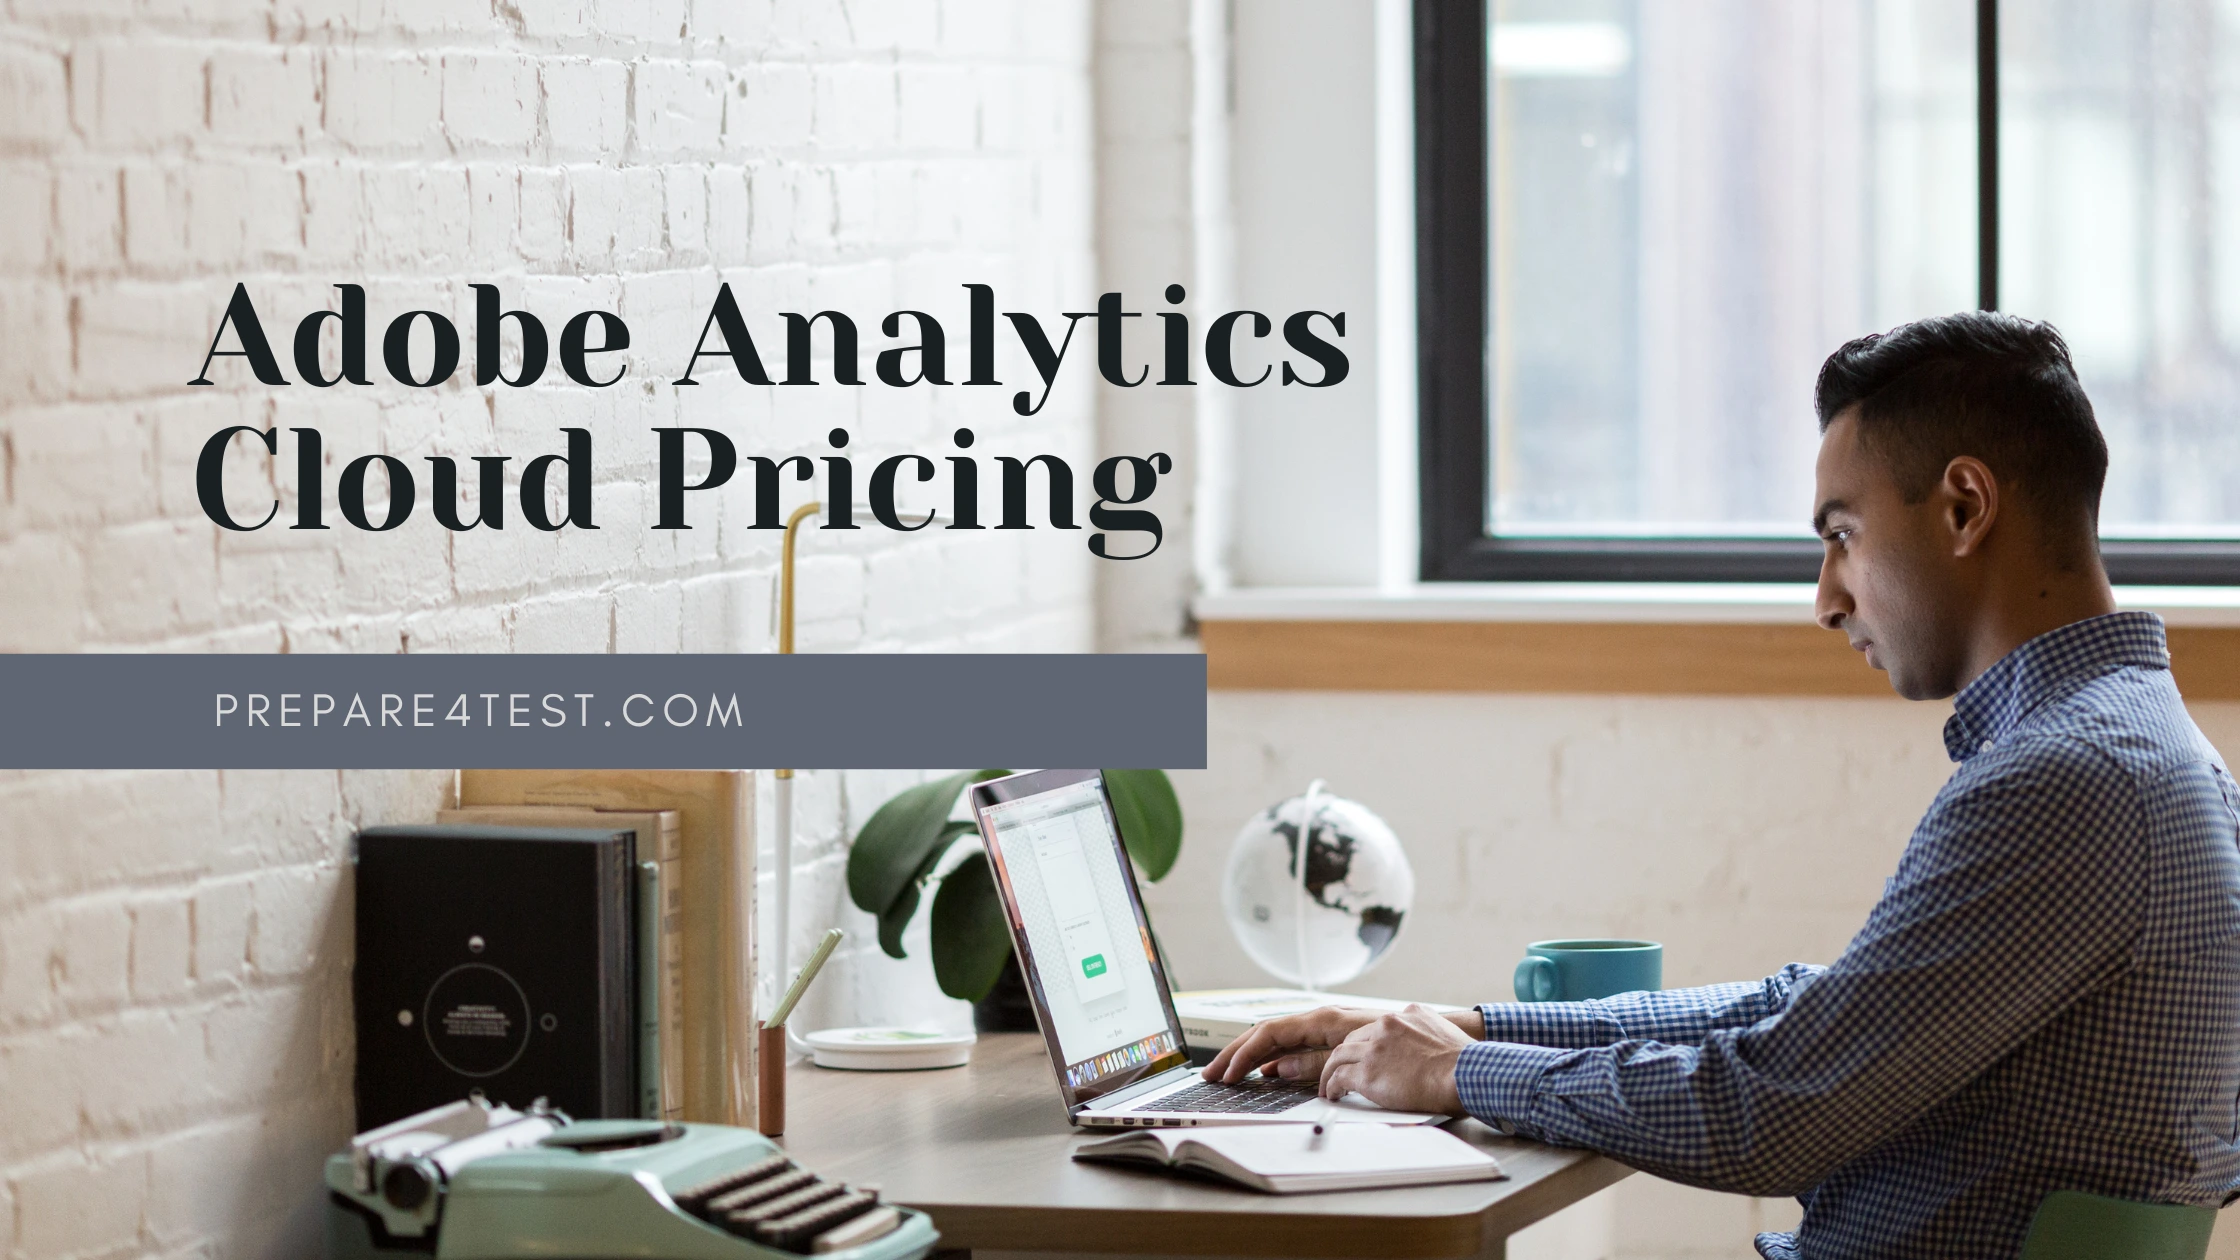 Adobe Analytics Cloud Pricing